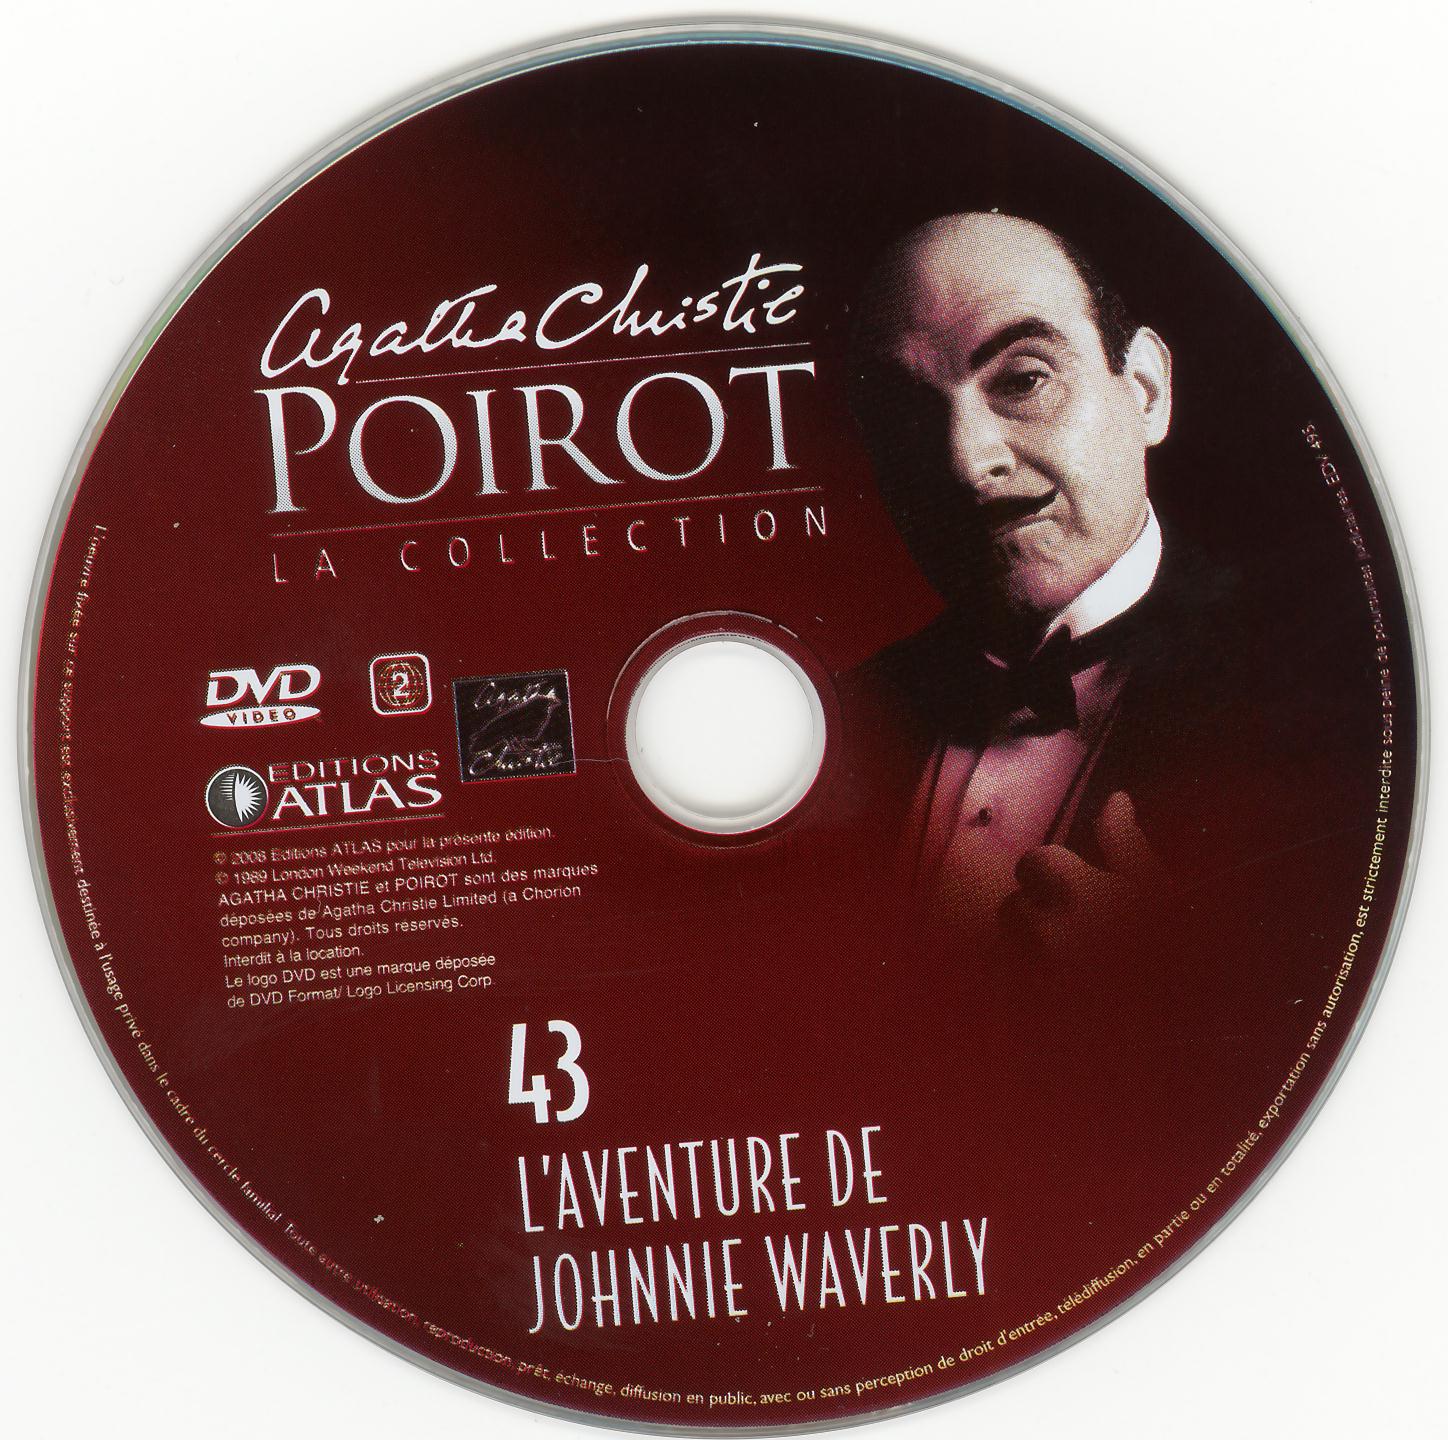 Hercule Poirot vol 43